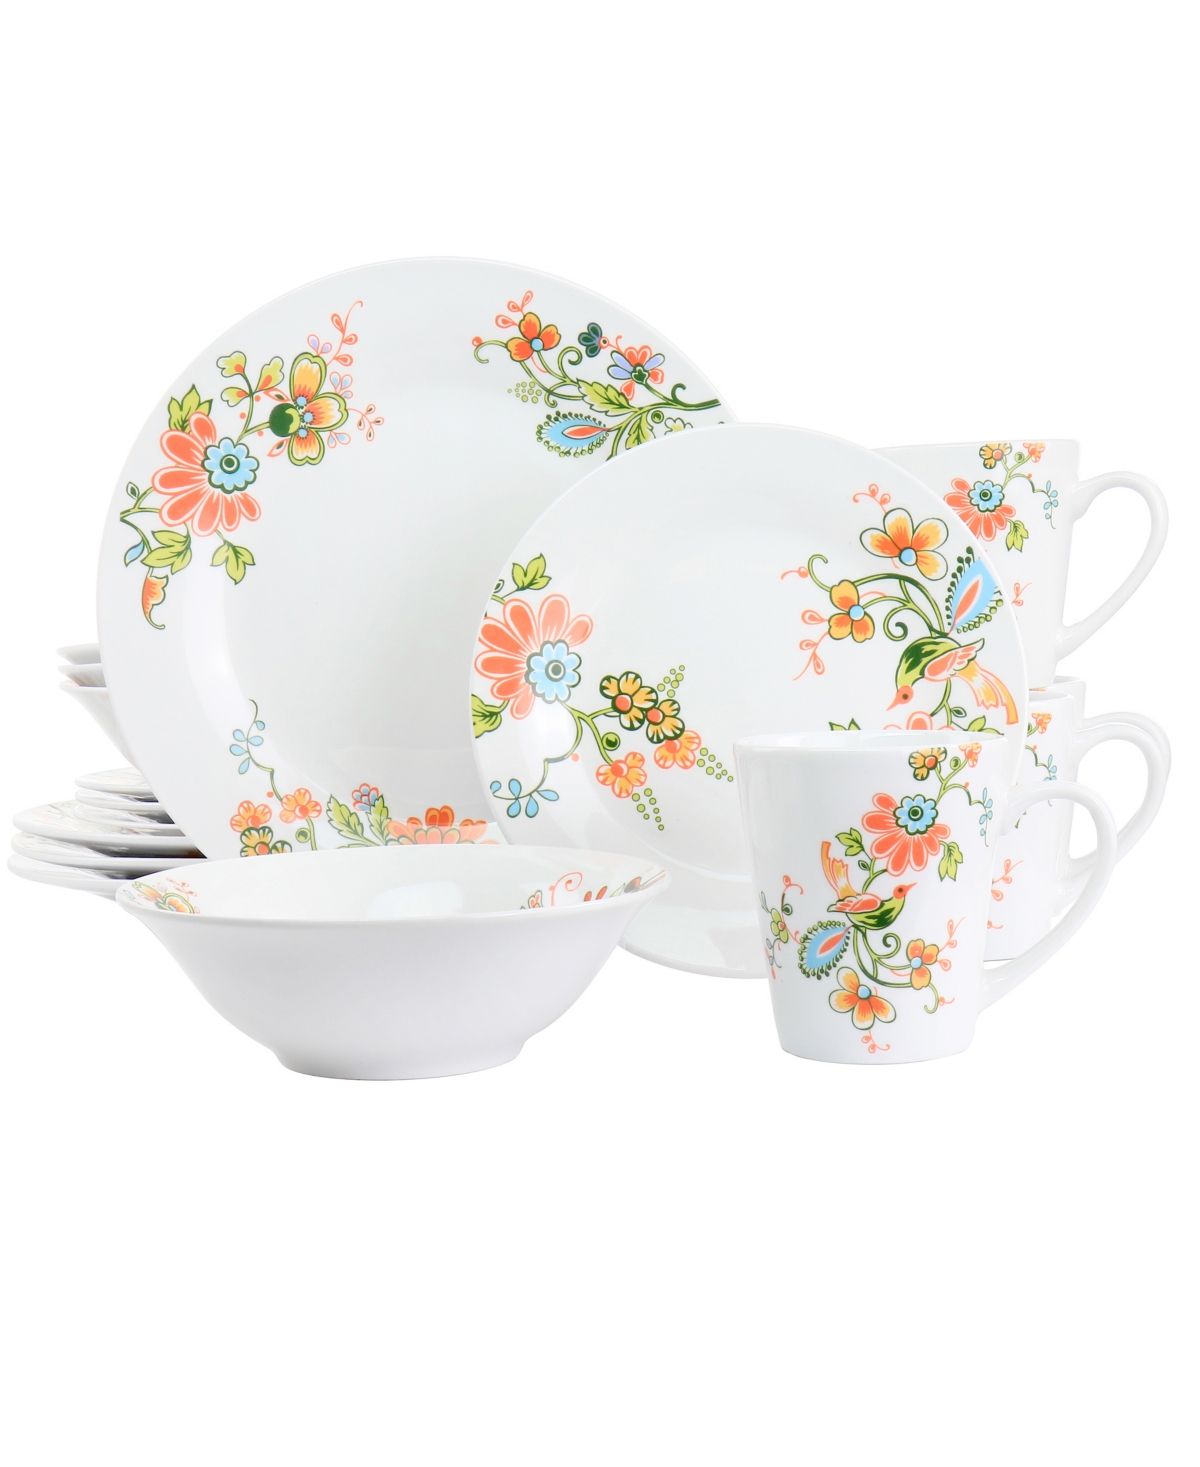 Floral Zoe 16 Piece Round Porcelain Dinnerware Set, Service for 4 - Multi-Color